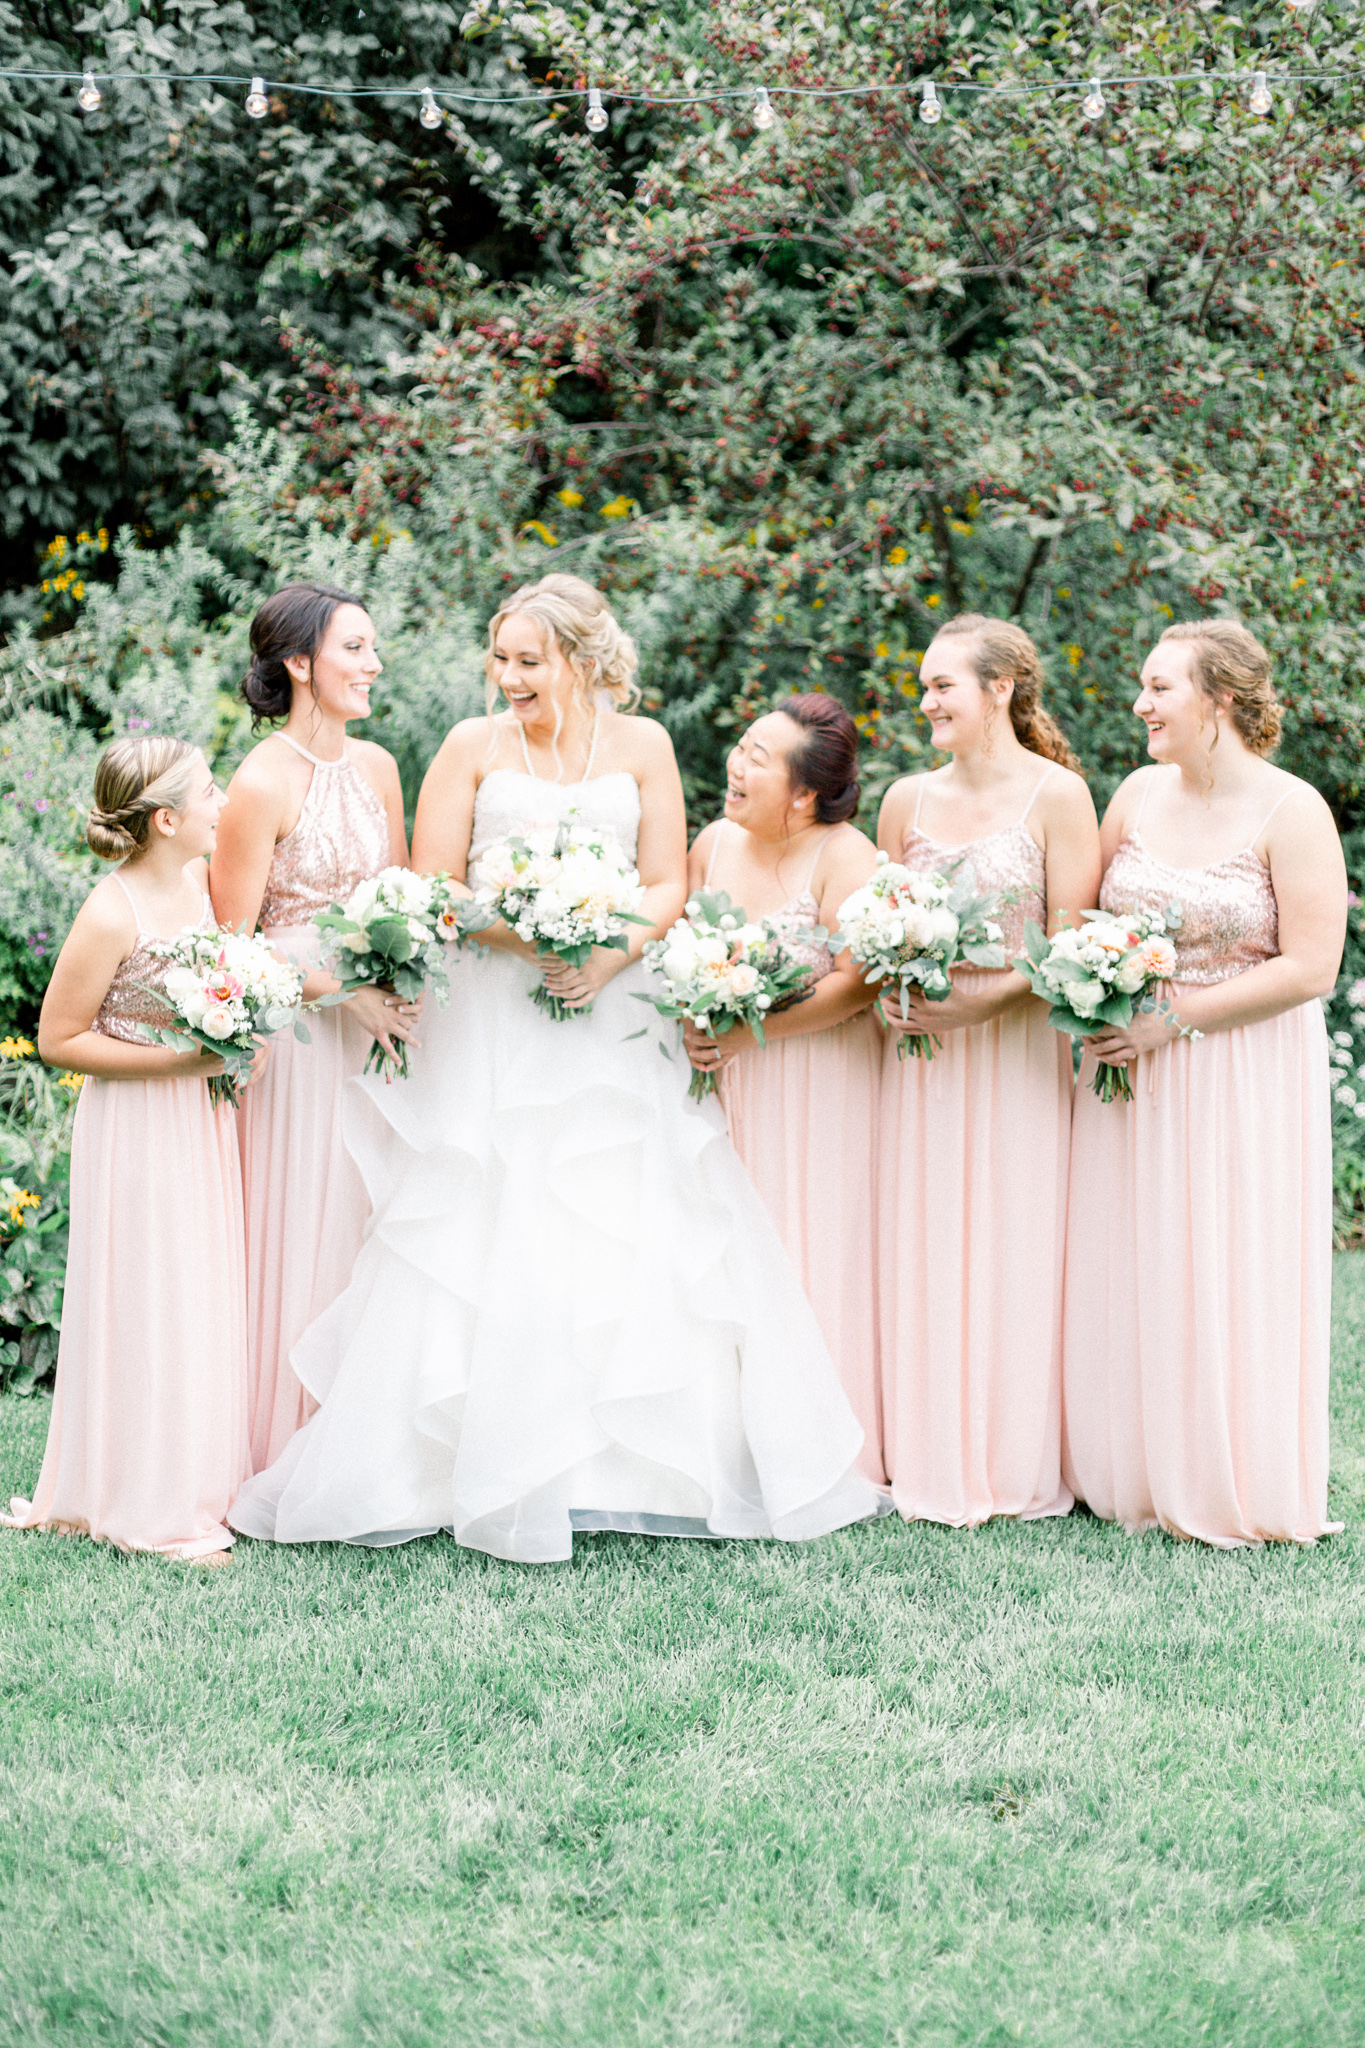 Courtney & Brett | A Florian Gardens Wedding - Sarah Larson Photography